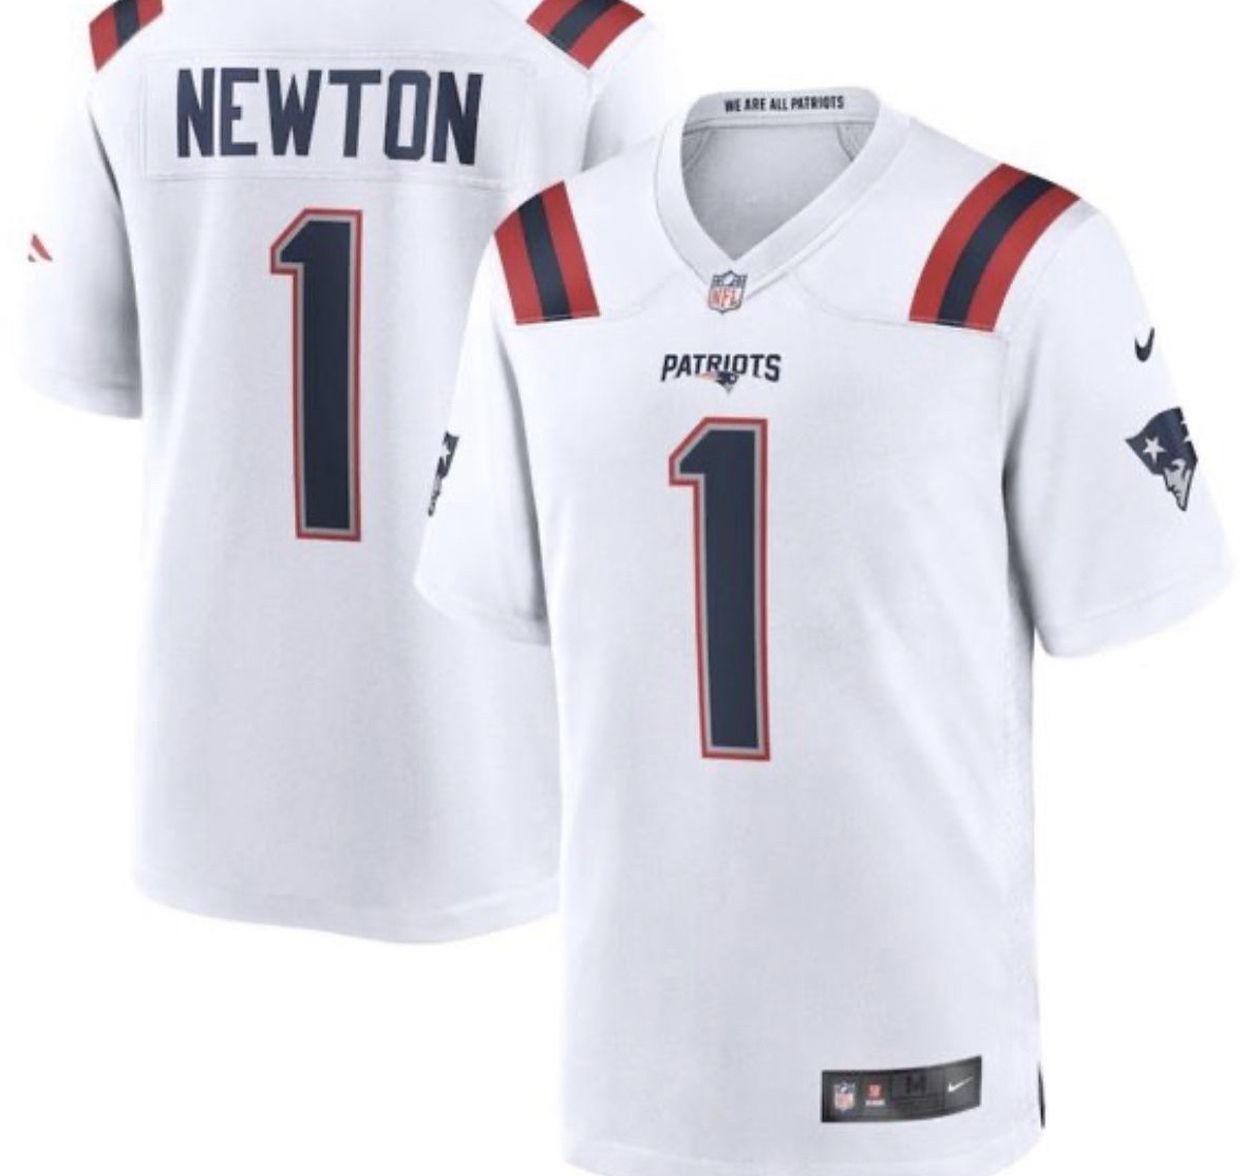 New England Patriots #1 Newton Jersey